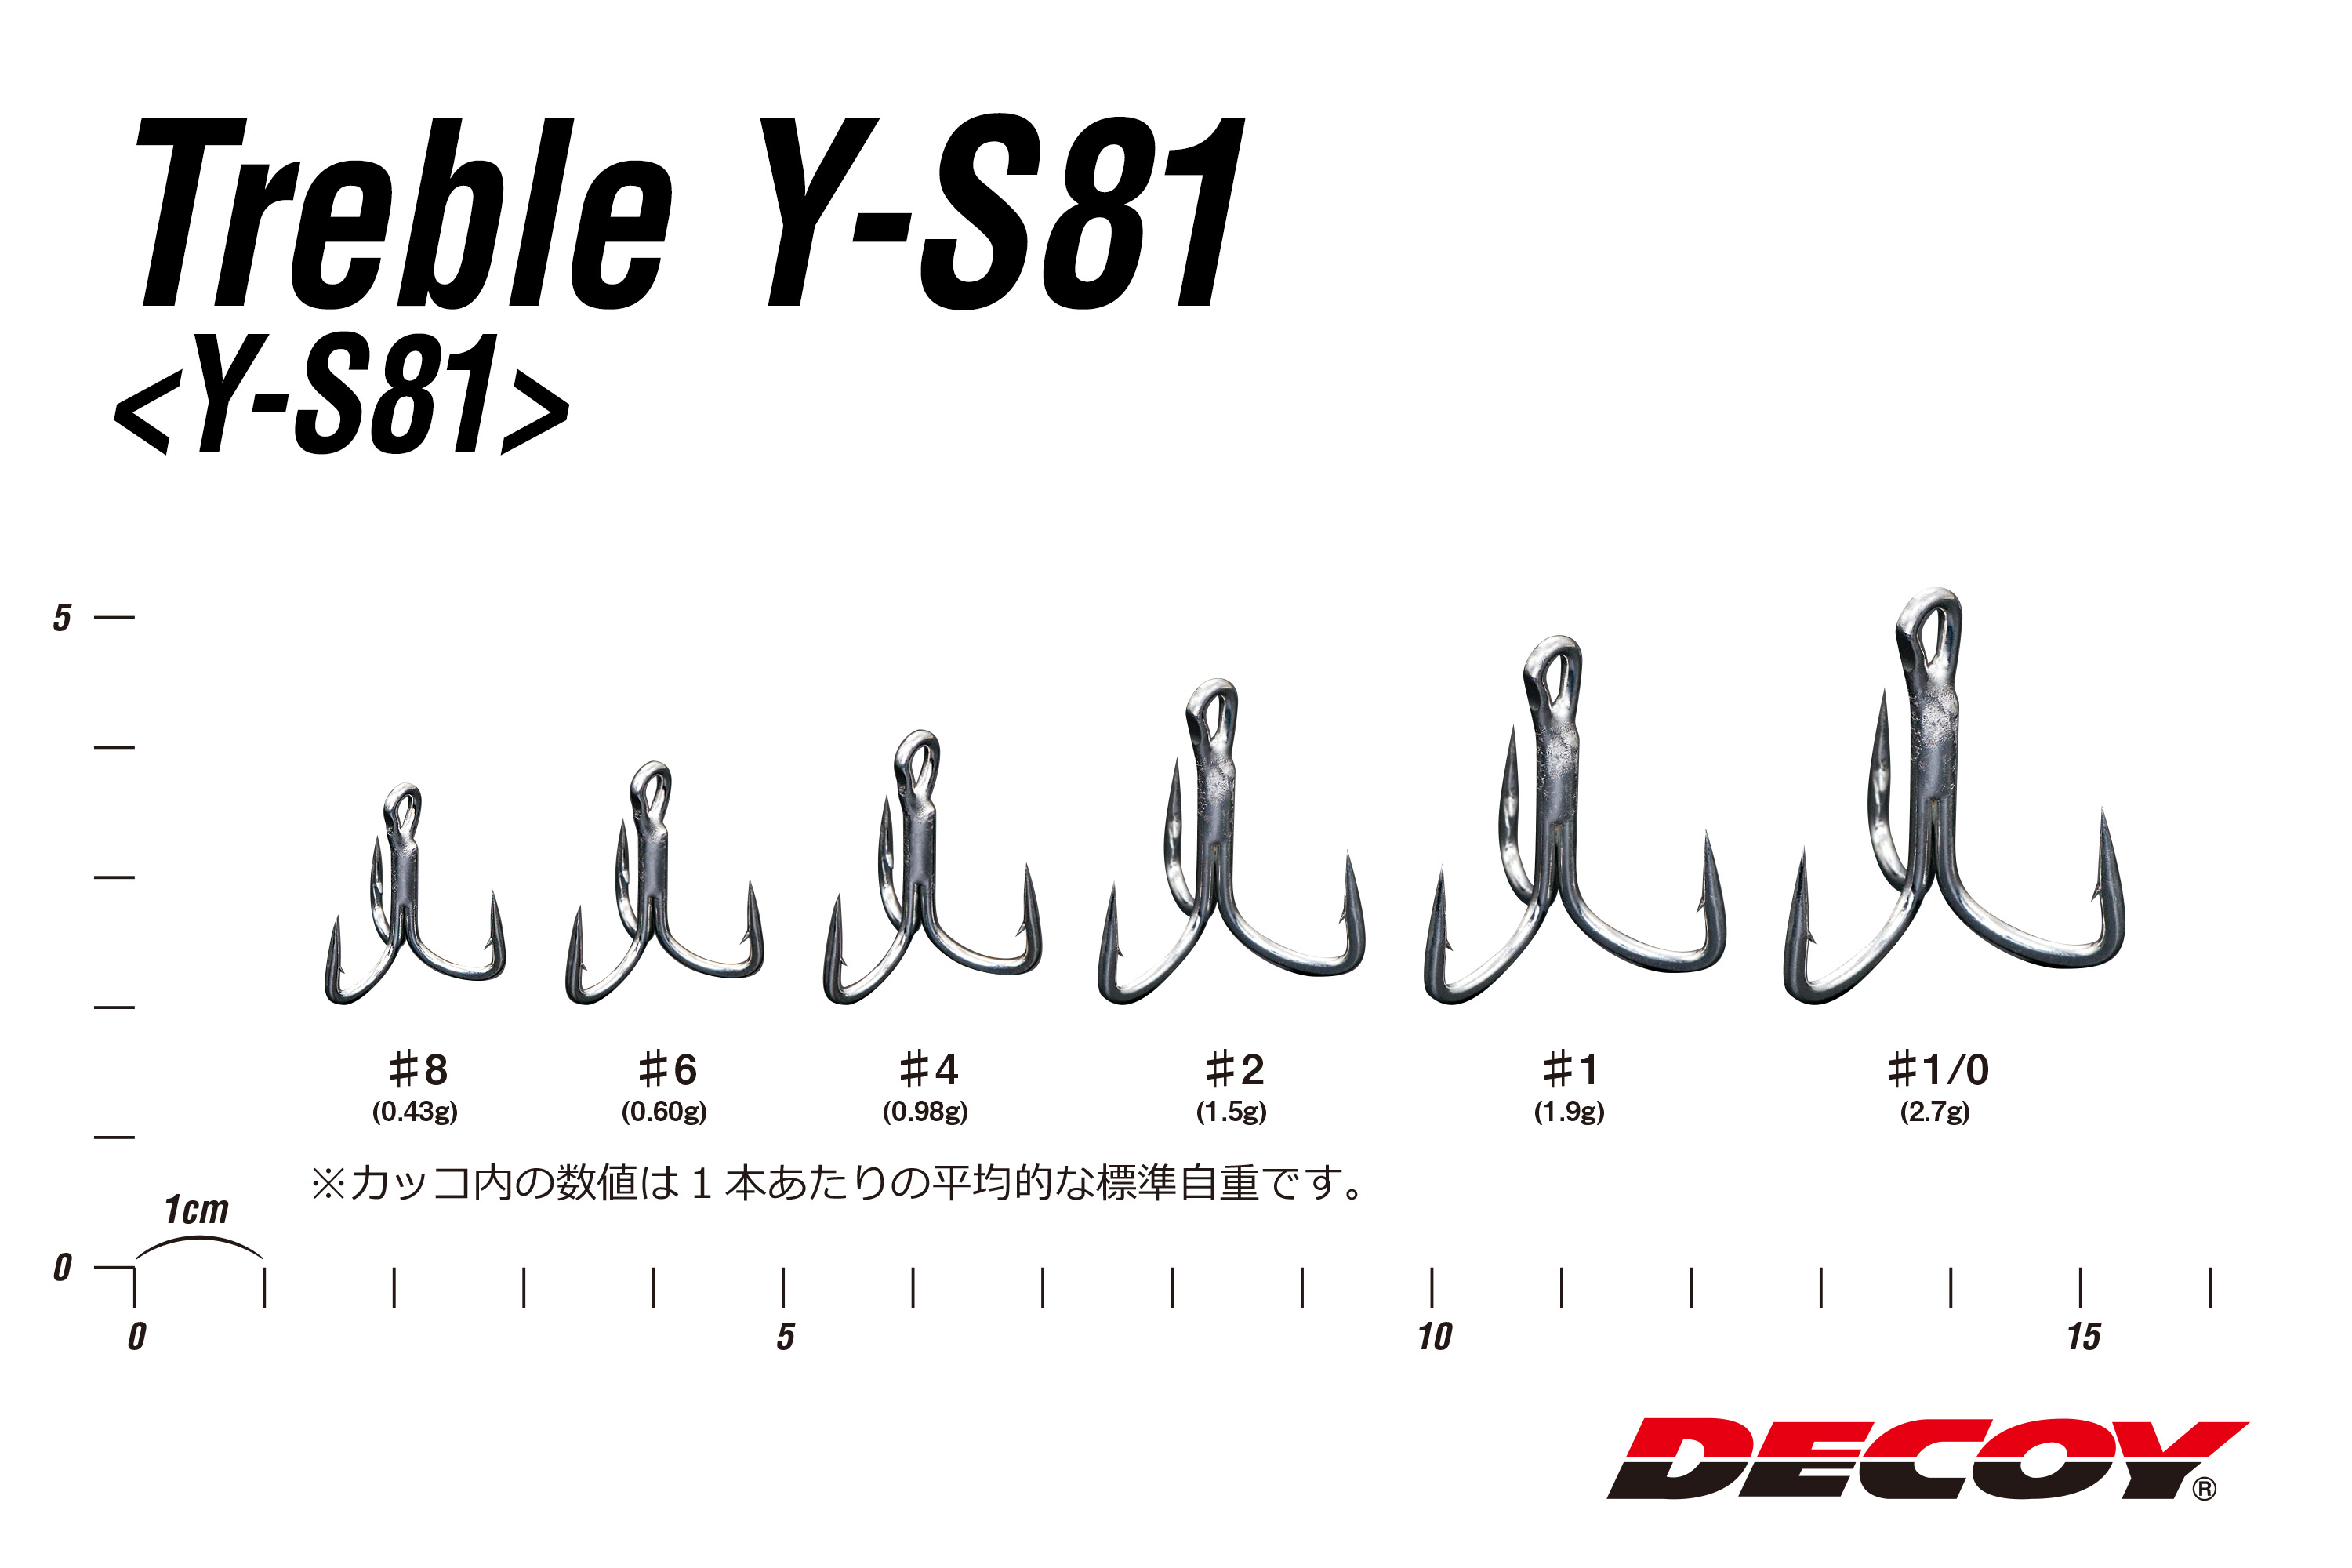 Decoy - Y-S81 Super Heavy Duty Treble Hooks - Sizing Chart